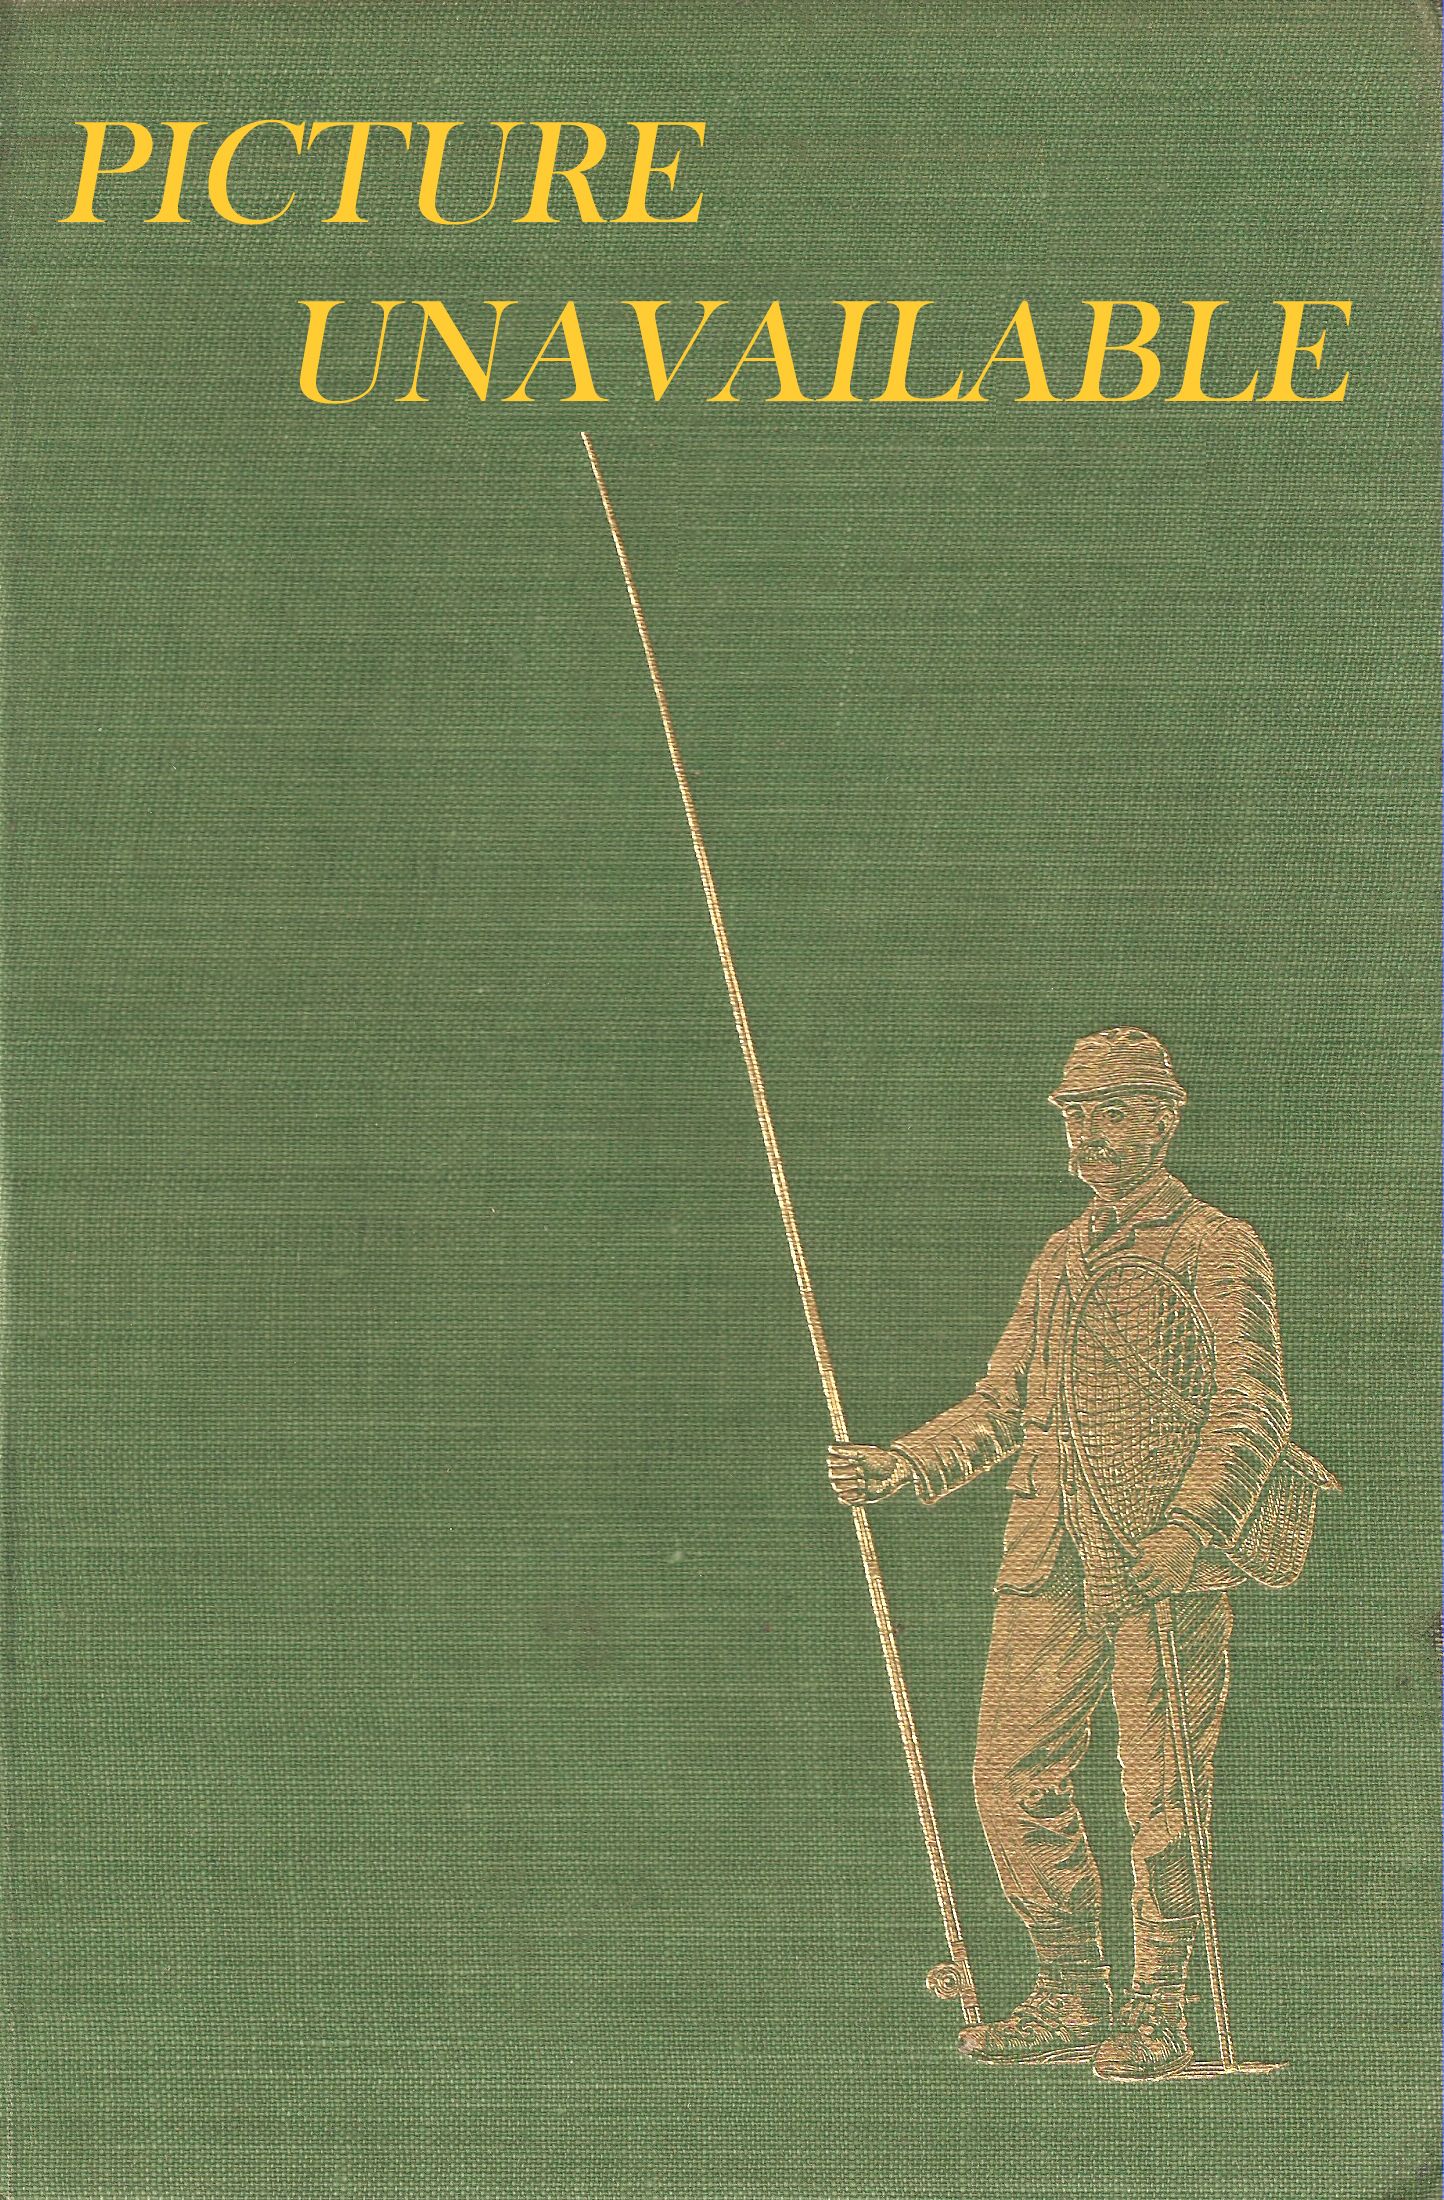 CAPREOLUS: THE STORY OF A ROE DEER. By Raymond E. Chaplin.